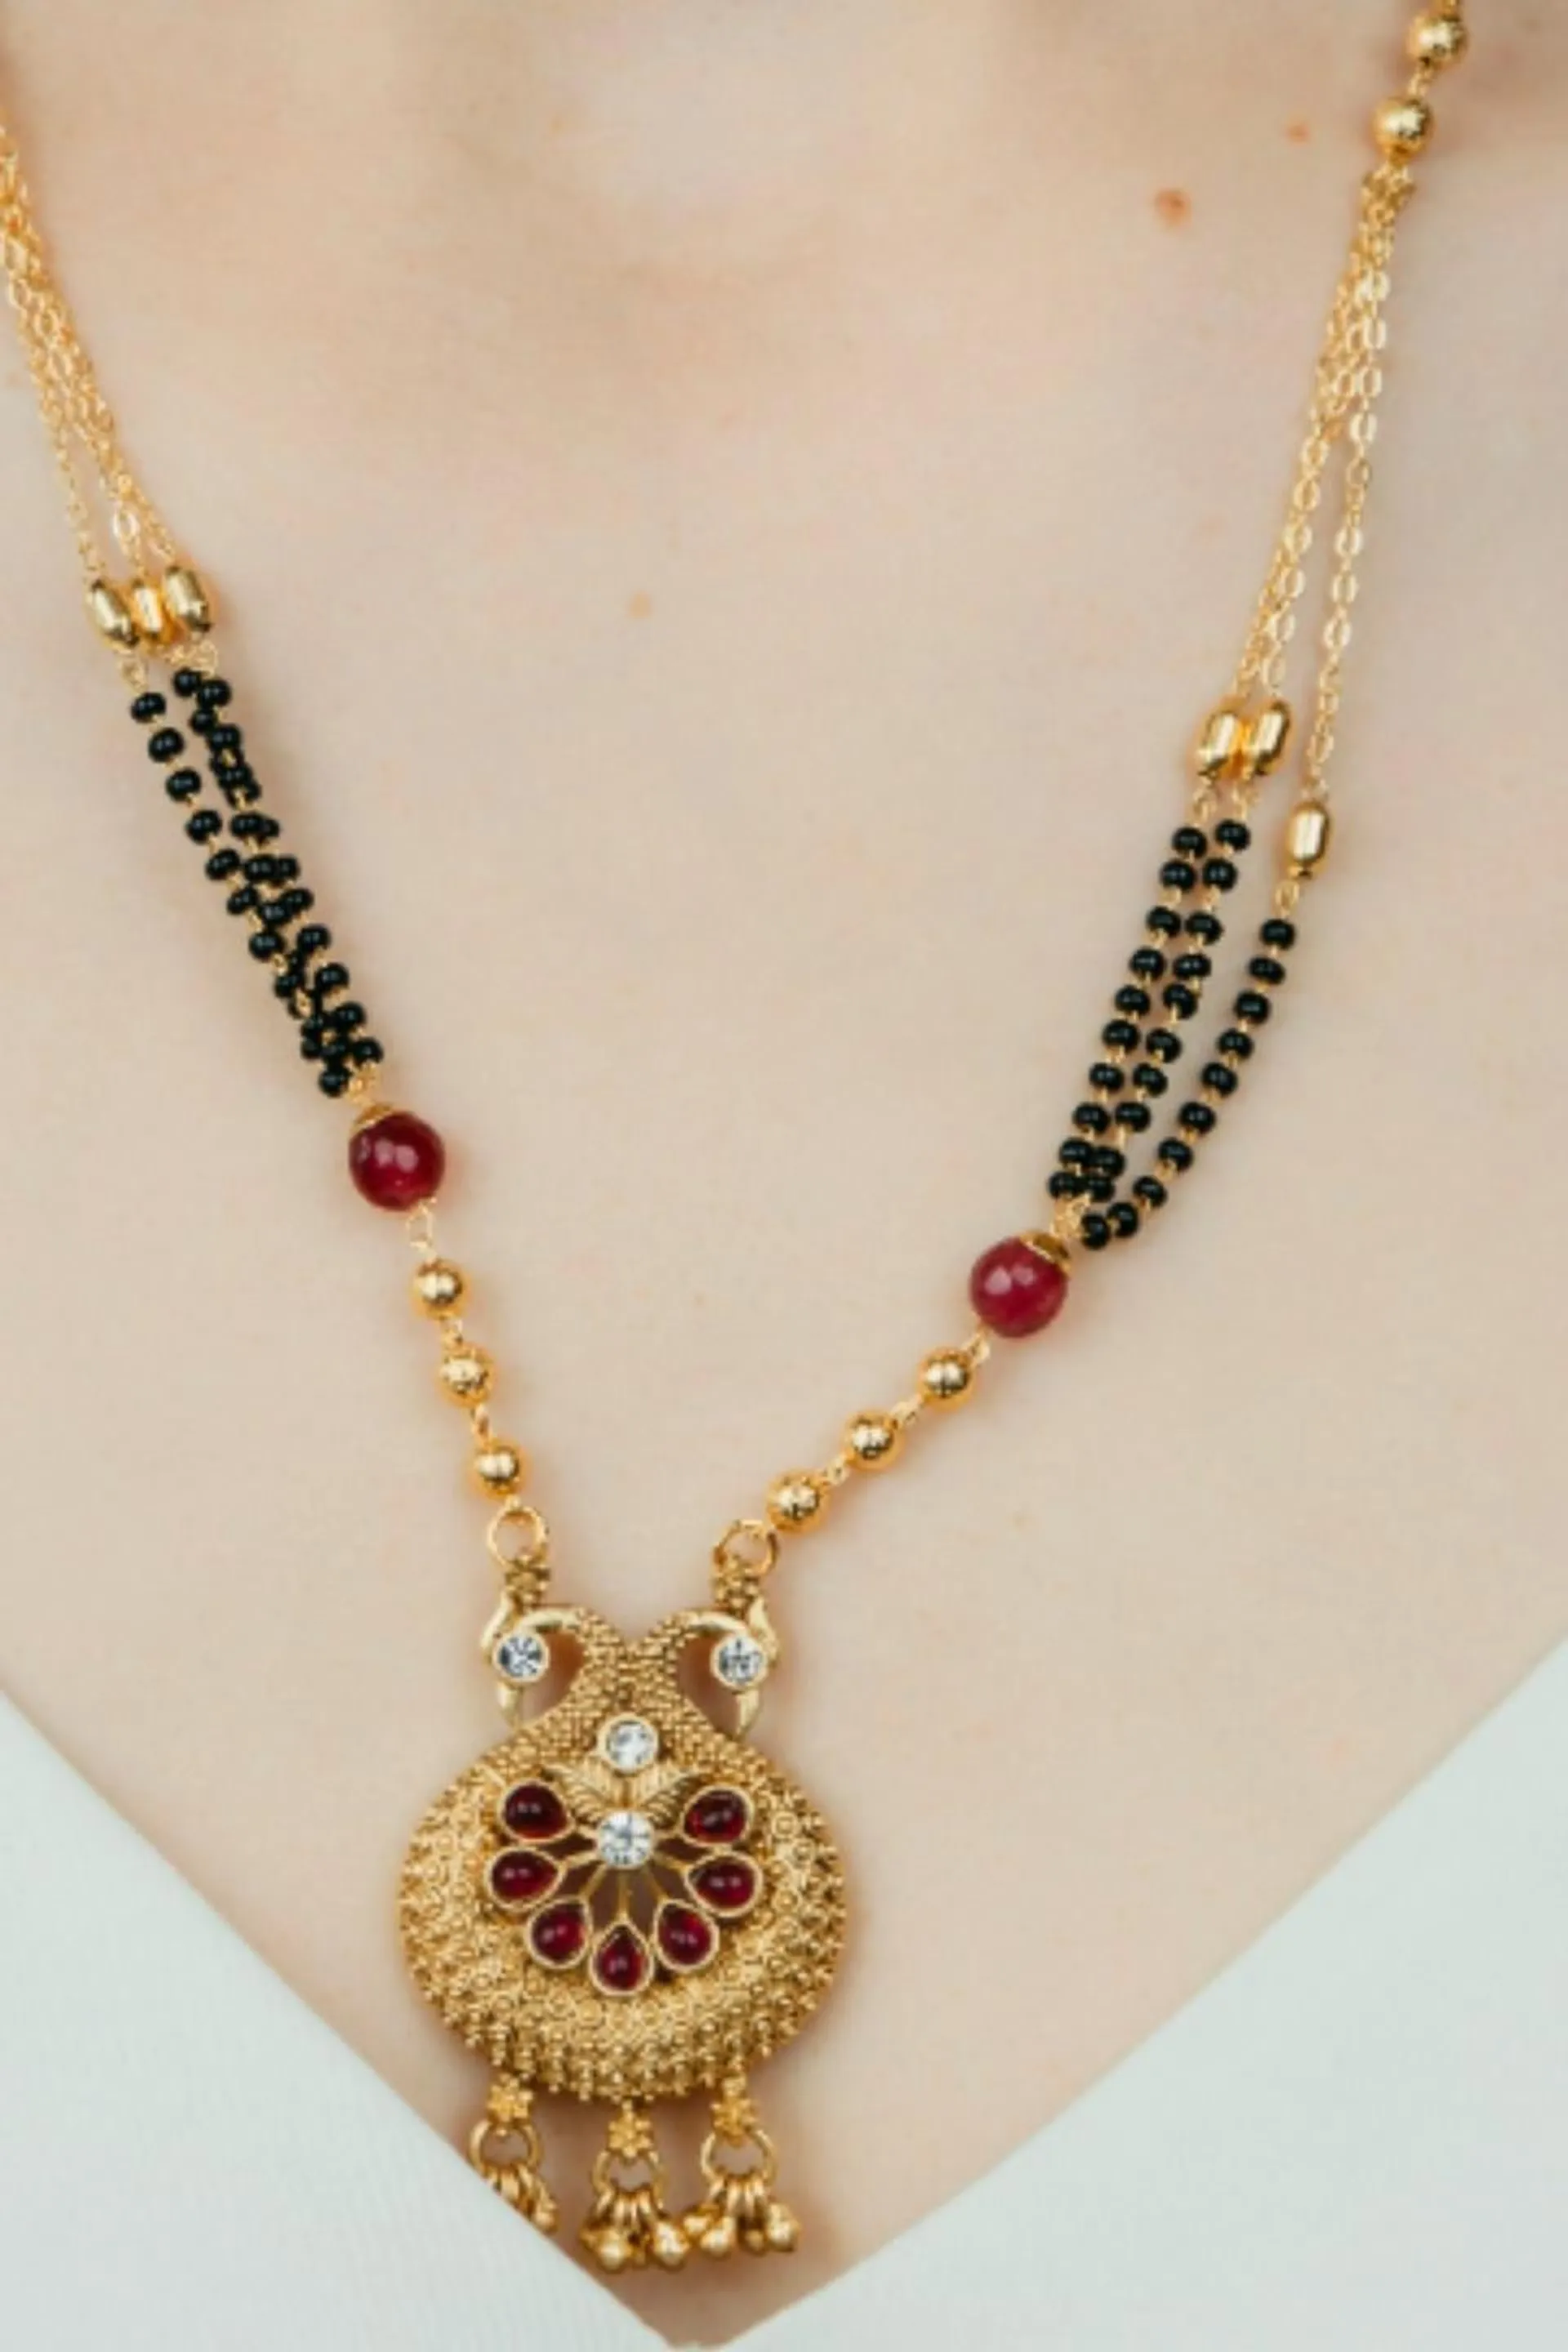 Brass Indian Mangalsutra Black Beads Wedding Ethnic Asian Necklace